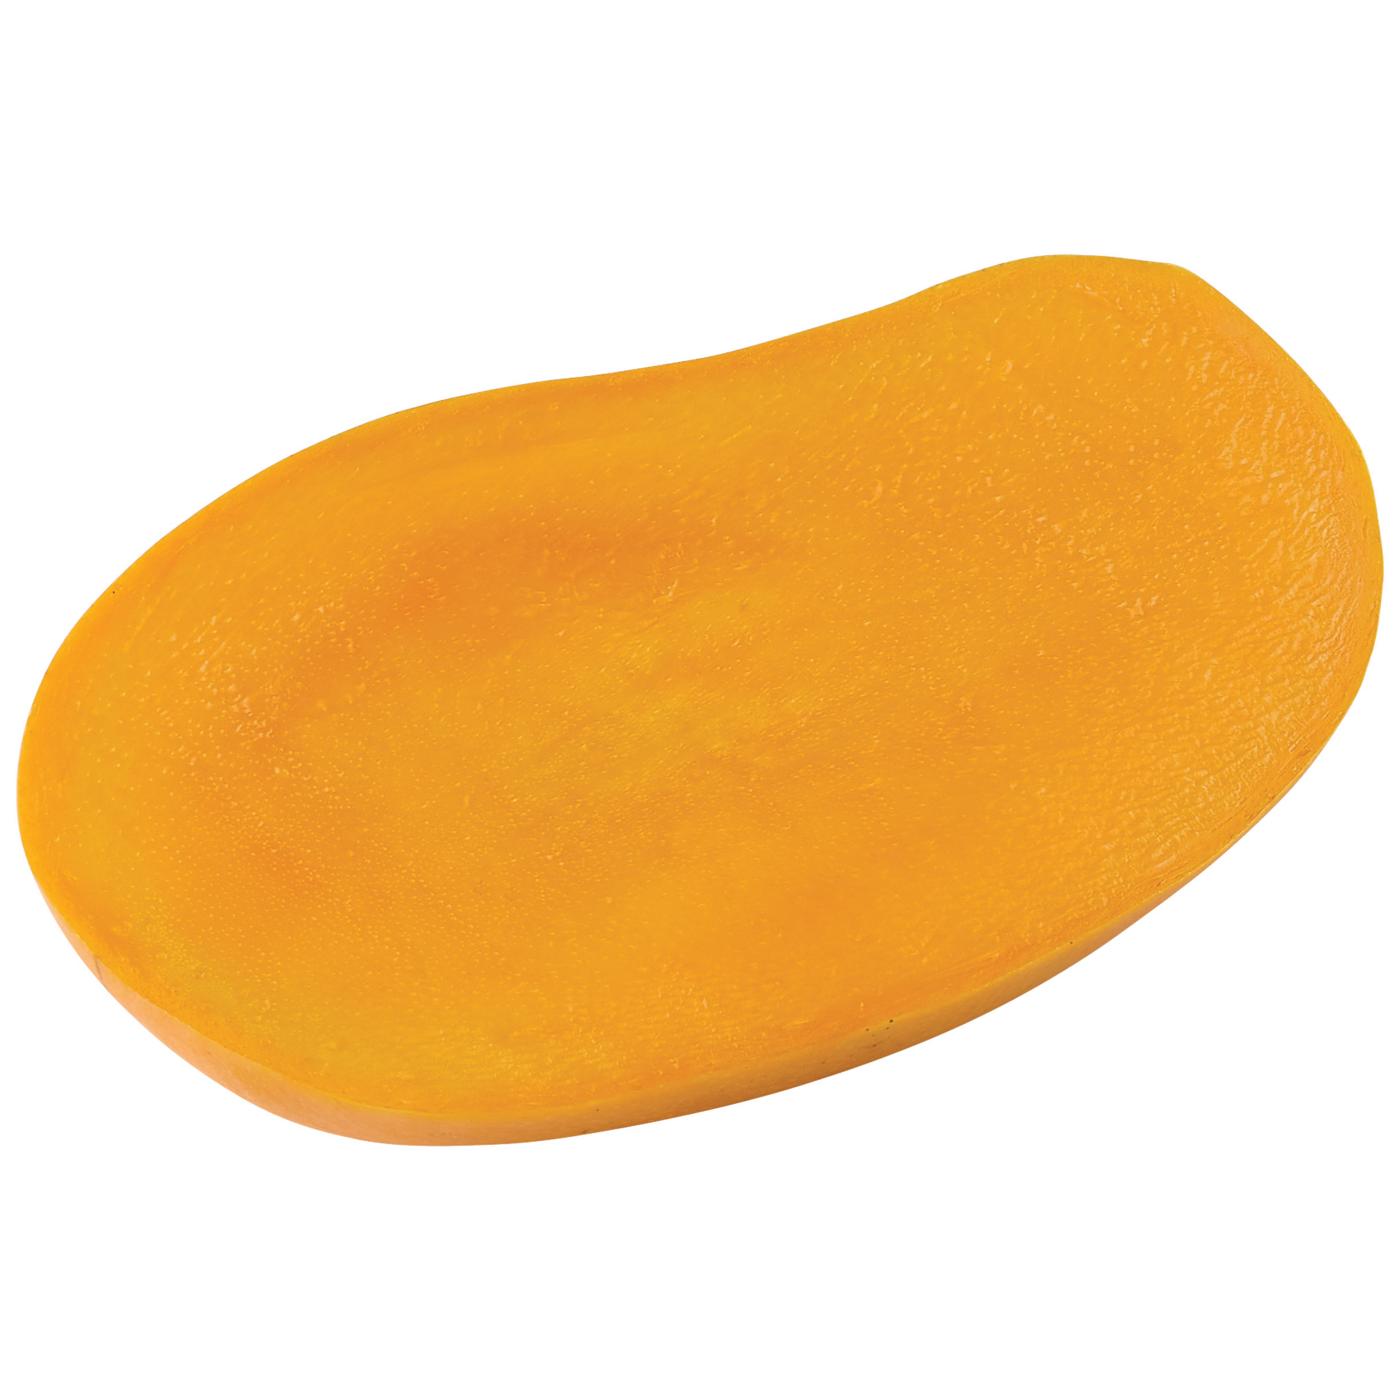 Fresh Small Ataulfo Mango; image 3 of 4